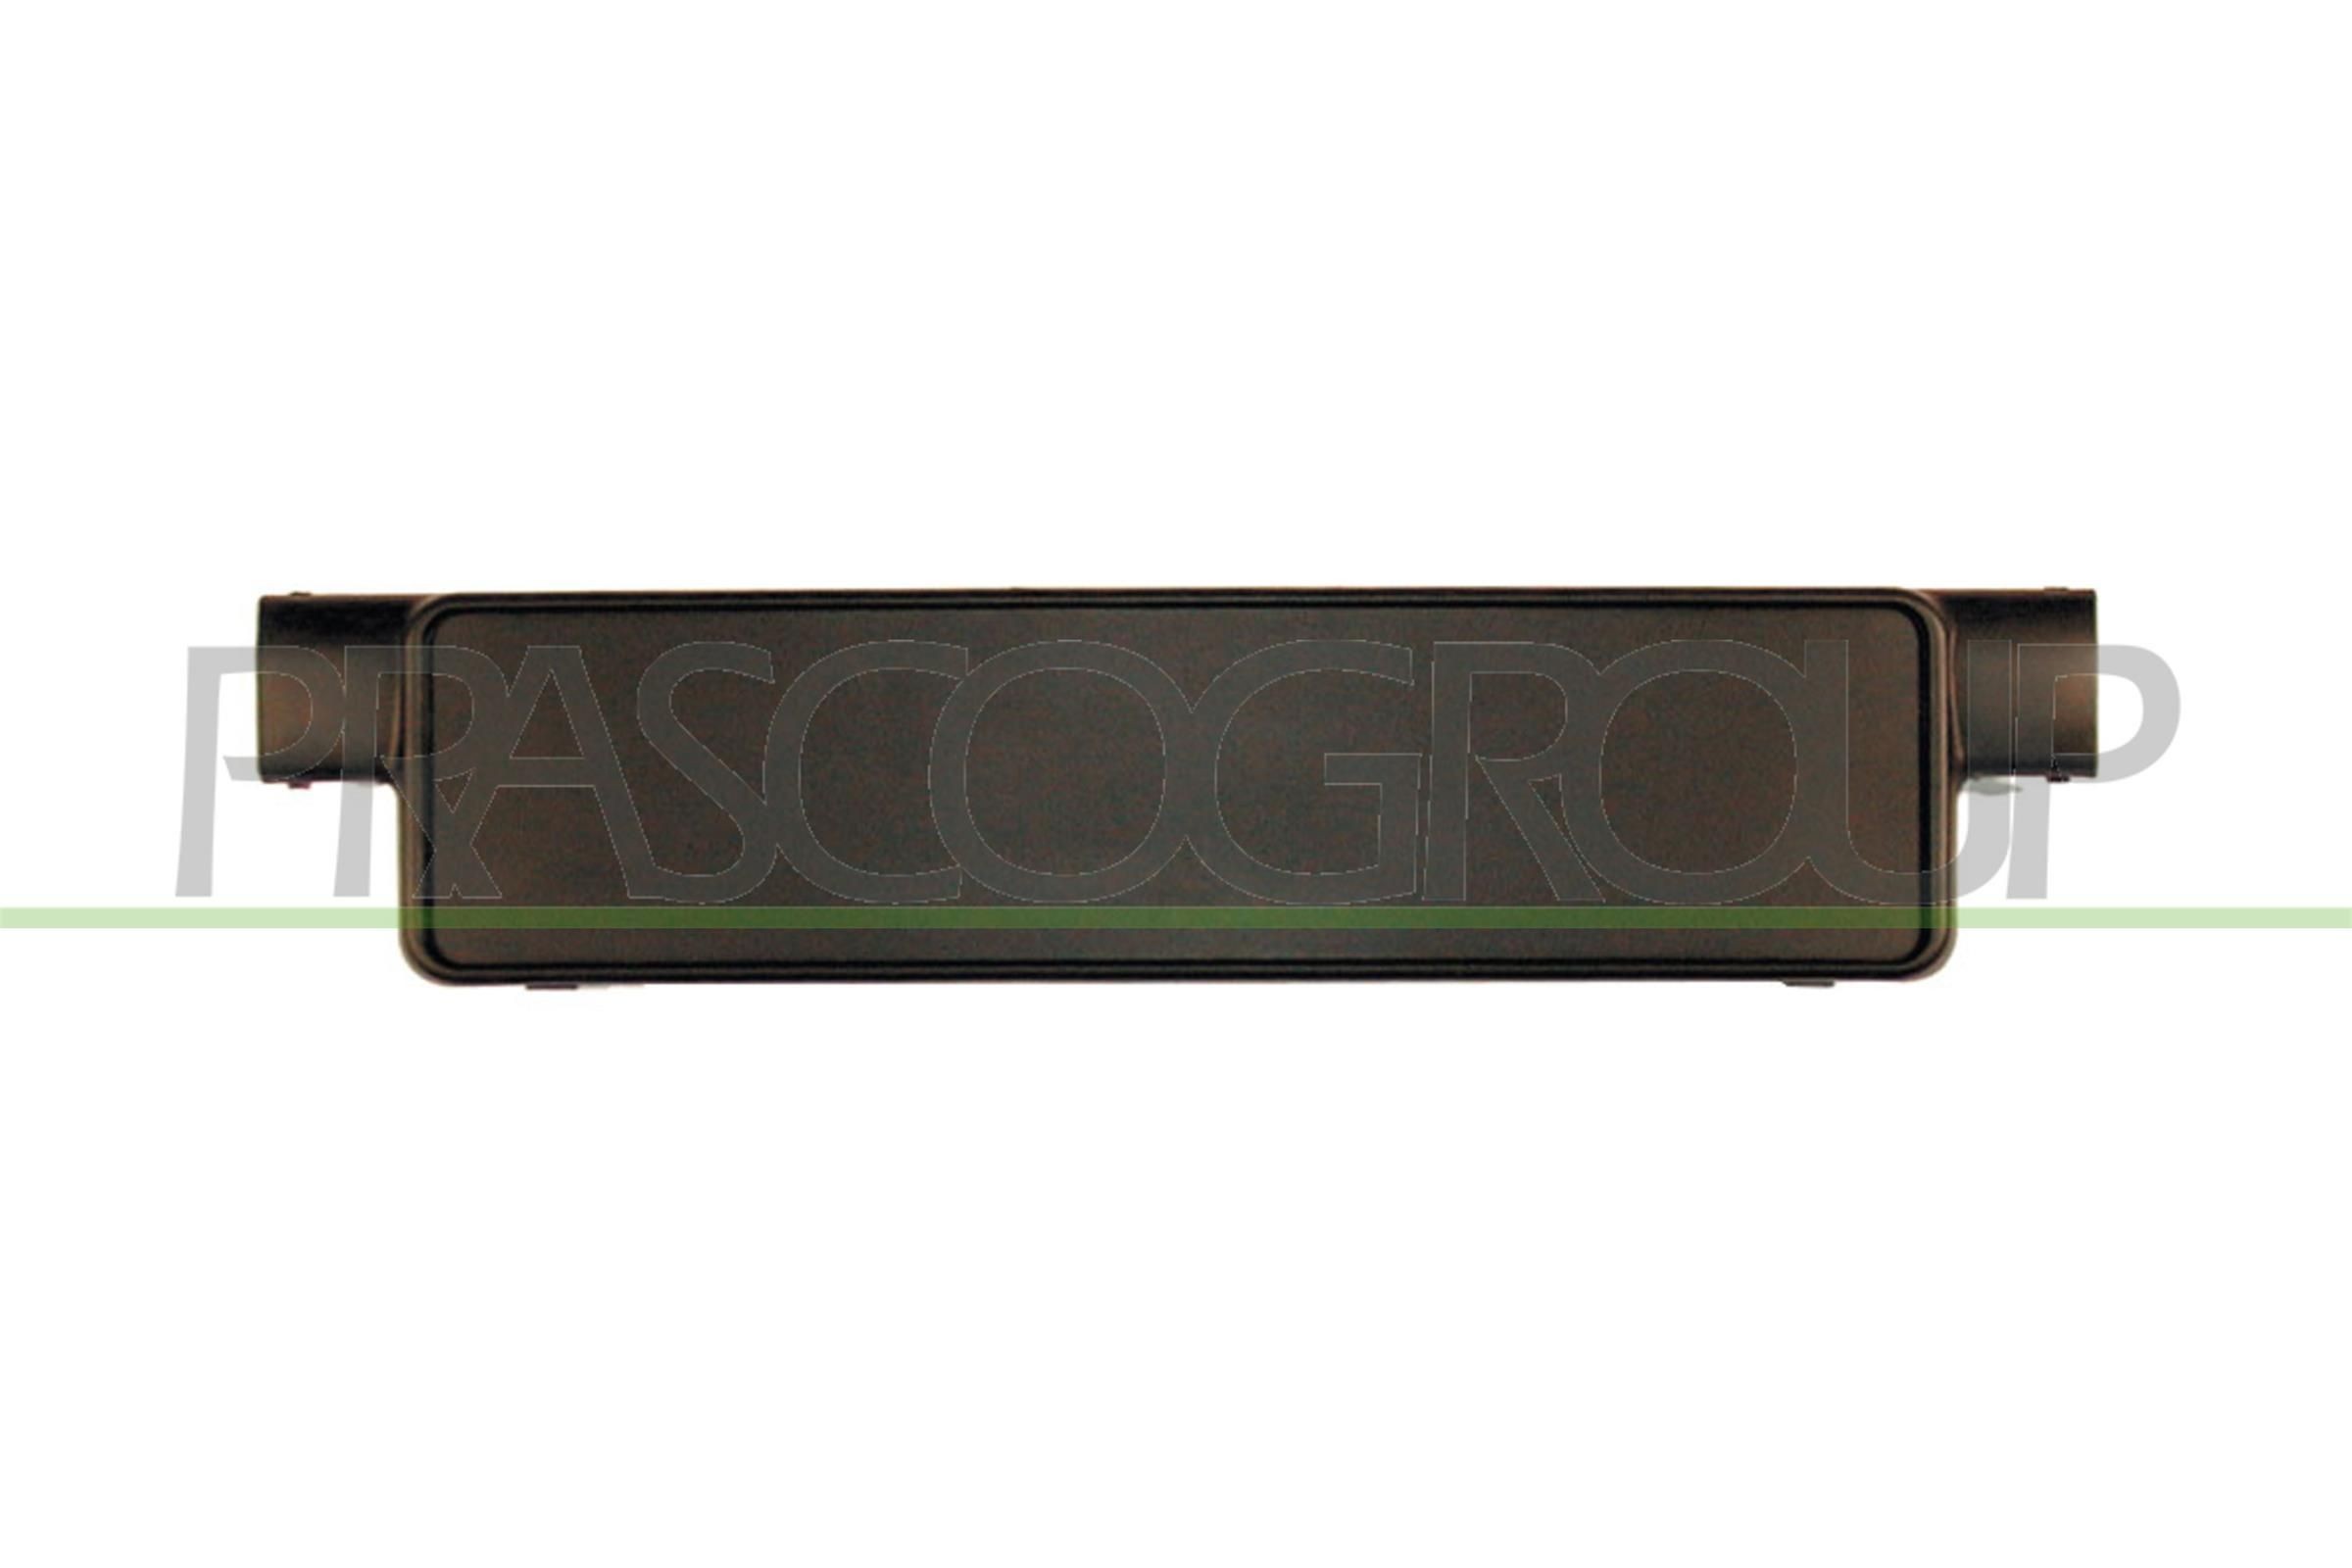 Original BM0181539 PRASCO Licence plate holder / bracket experience and price